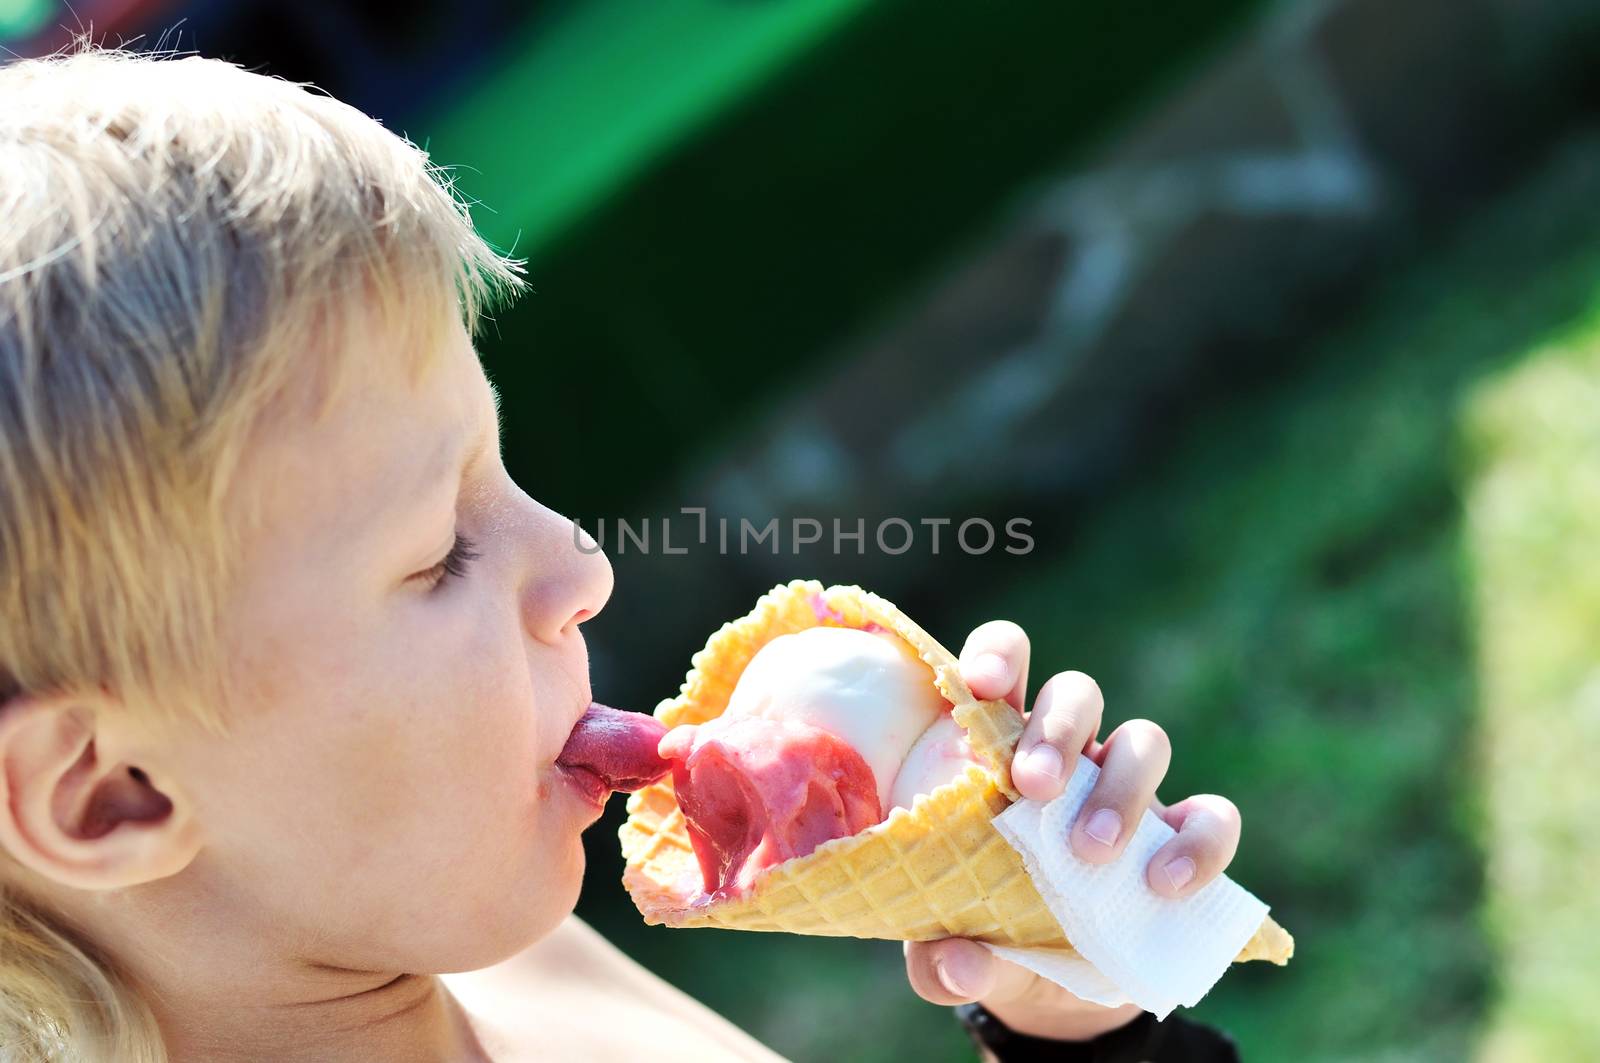 little boy licking ice cream in hot summer day